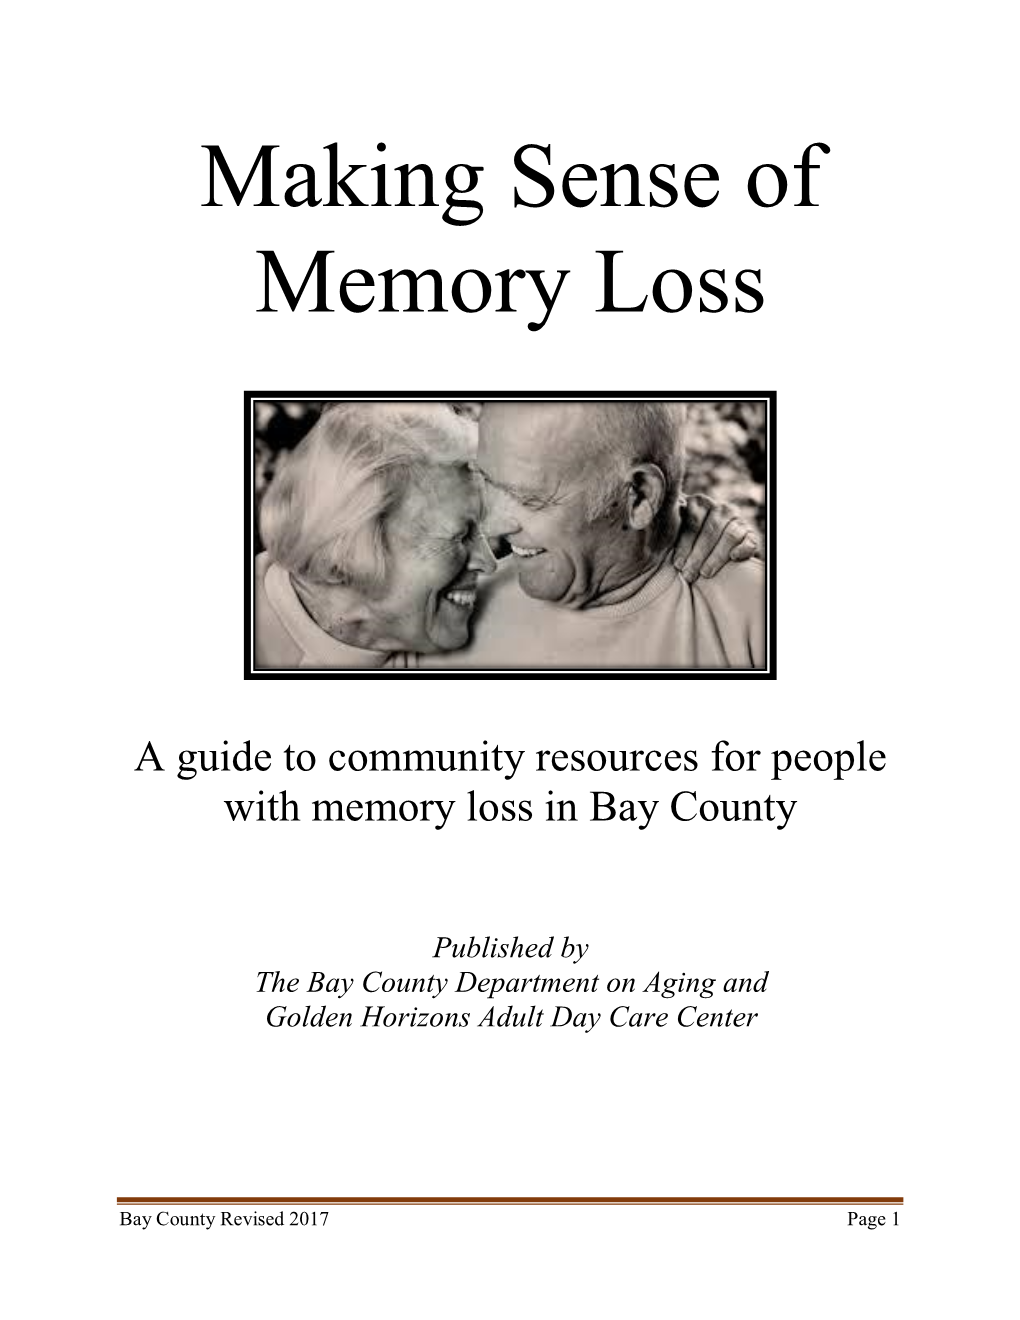 Making Sense of Memory Loss